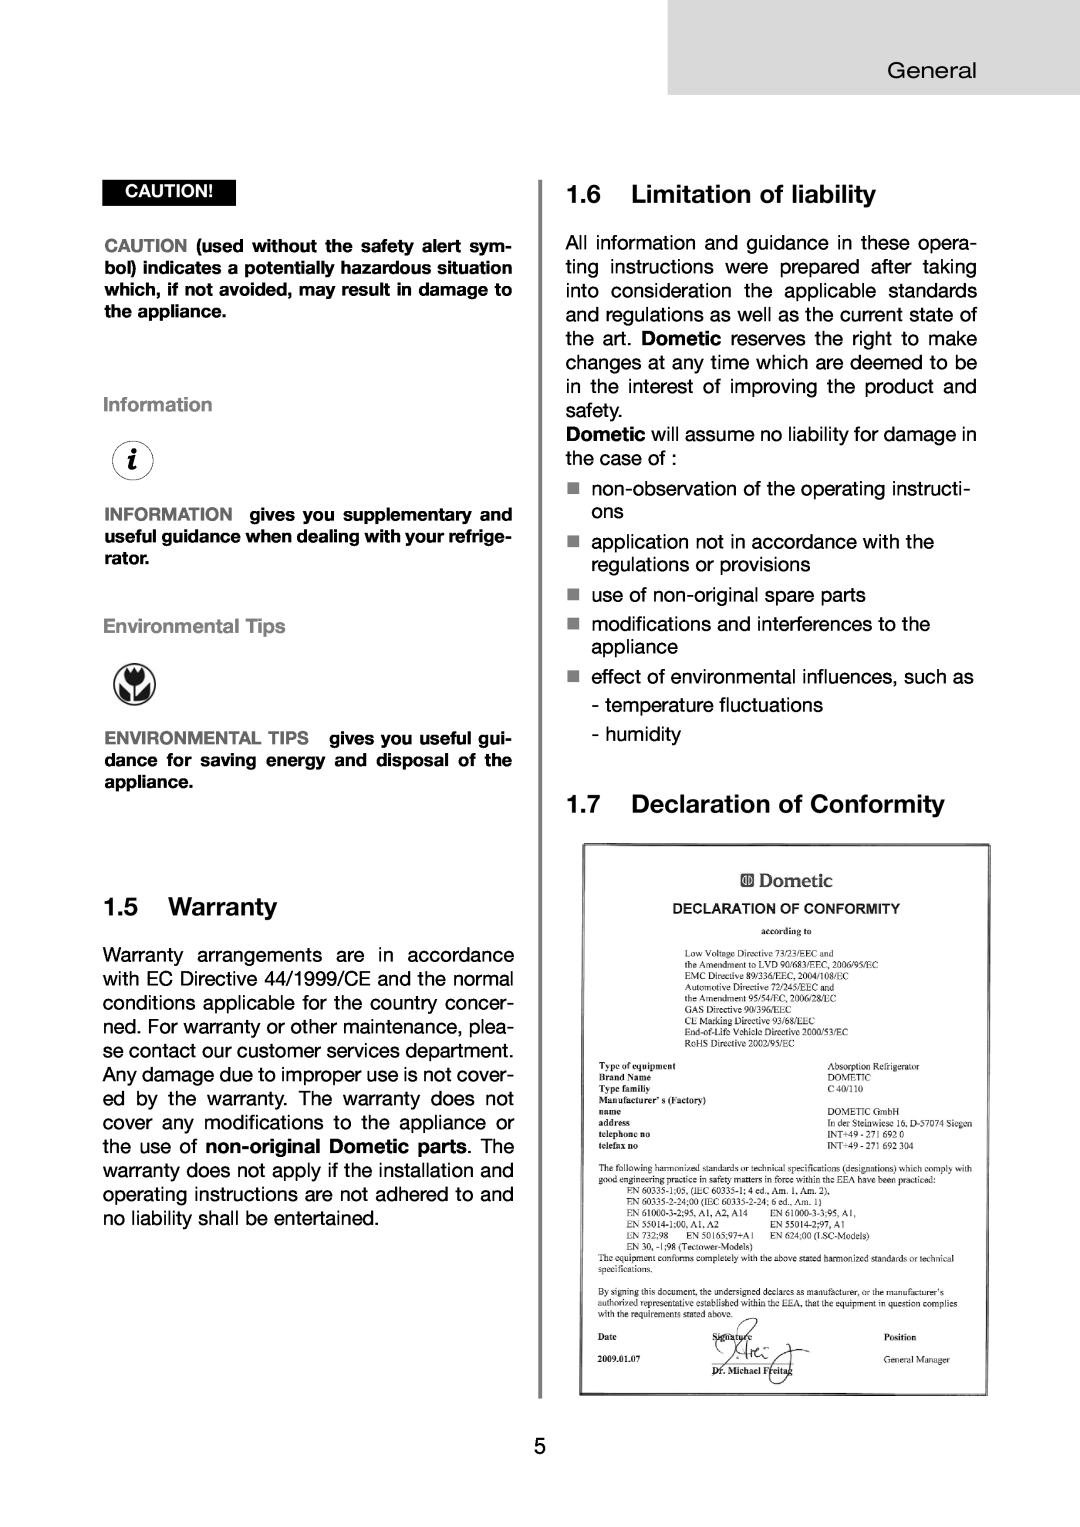 Dometic RMD 8501 Warranty, Limitation of liability, Declaration of Conformity, Information, Environmental Tips, General 